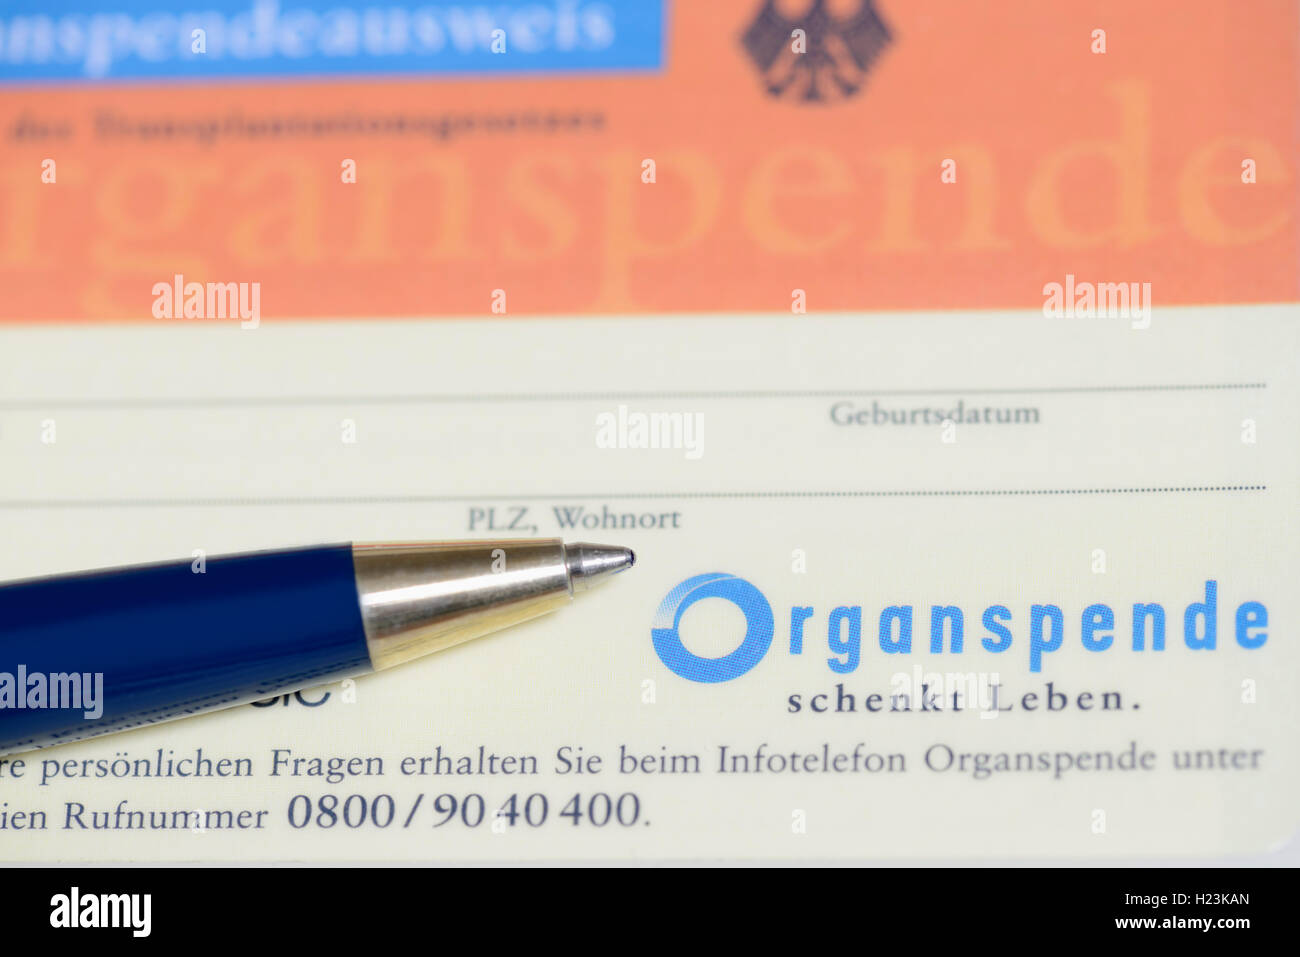 German donar card, Organspende, with pen Stock Photo